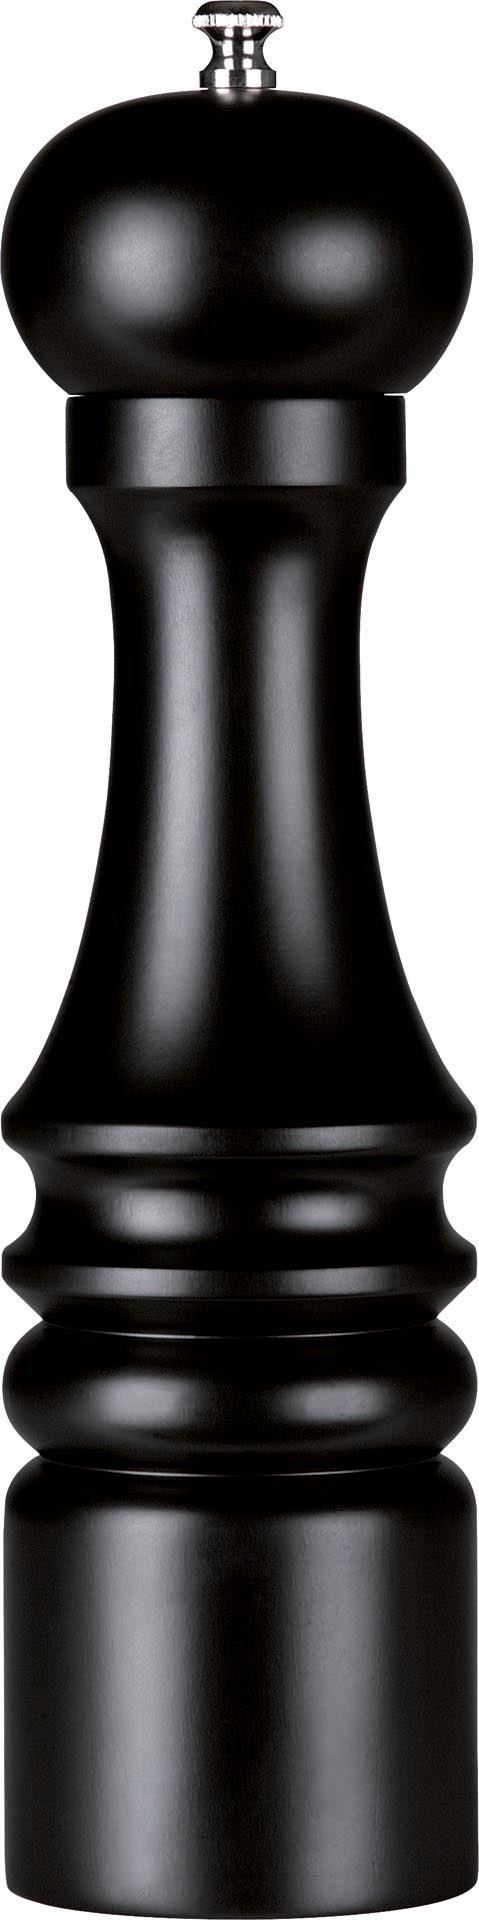 Pfeffermühle 26 cm schwarz